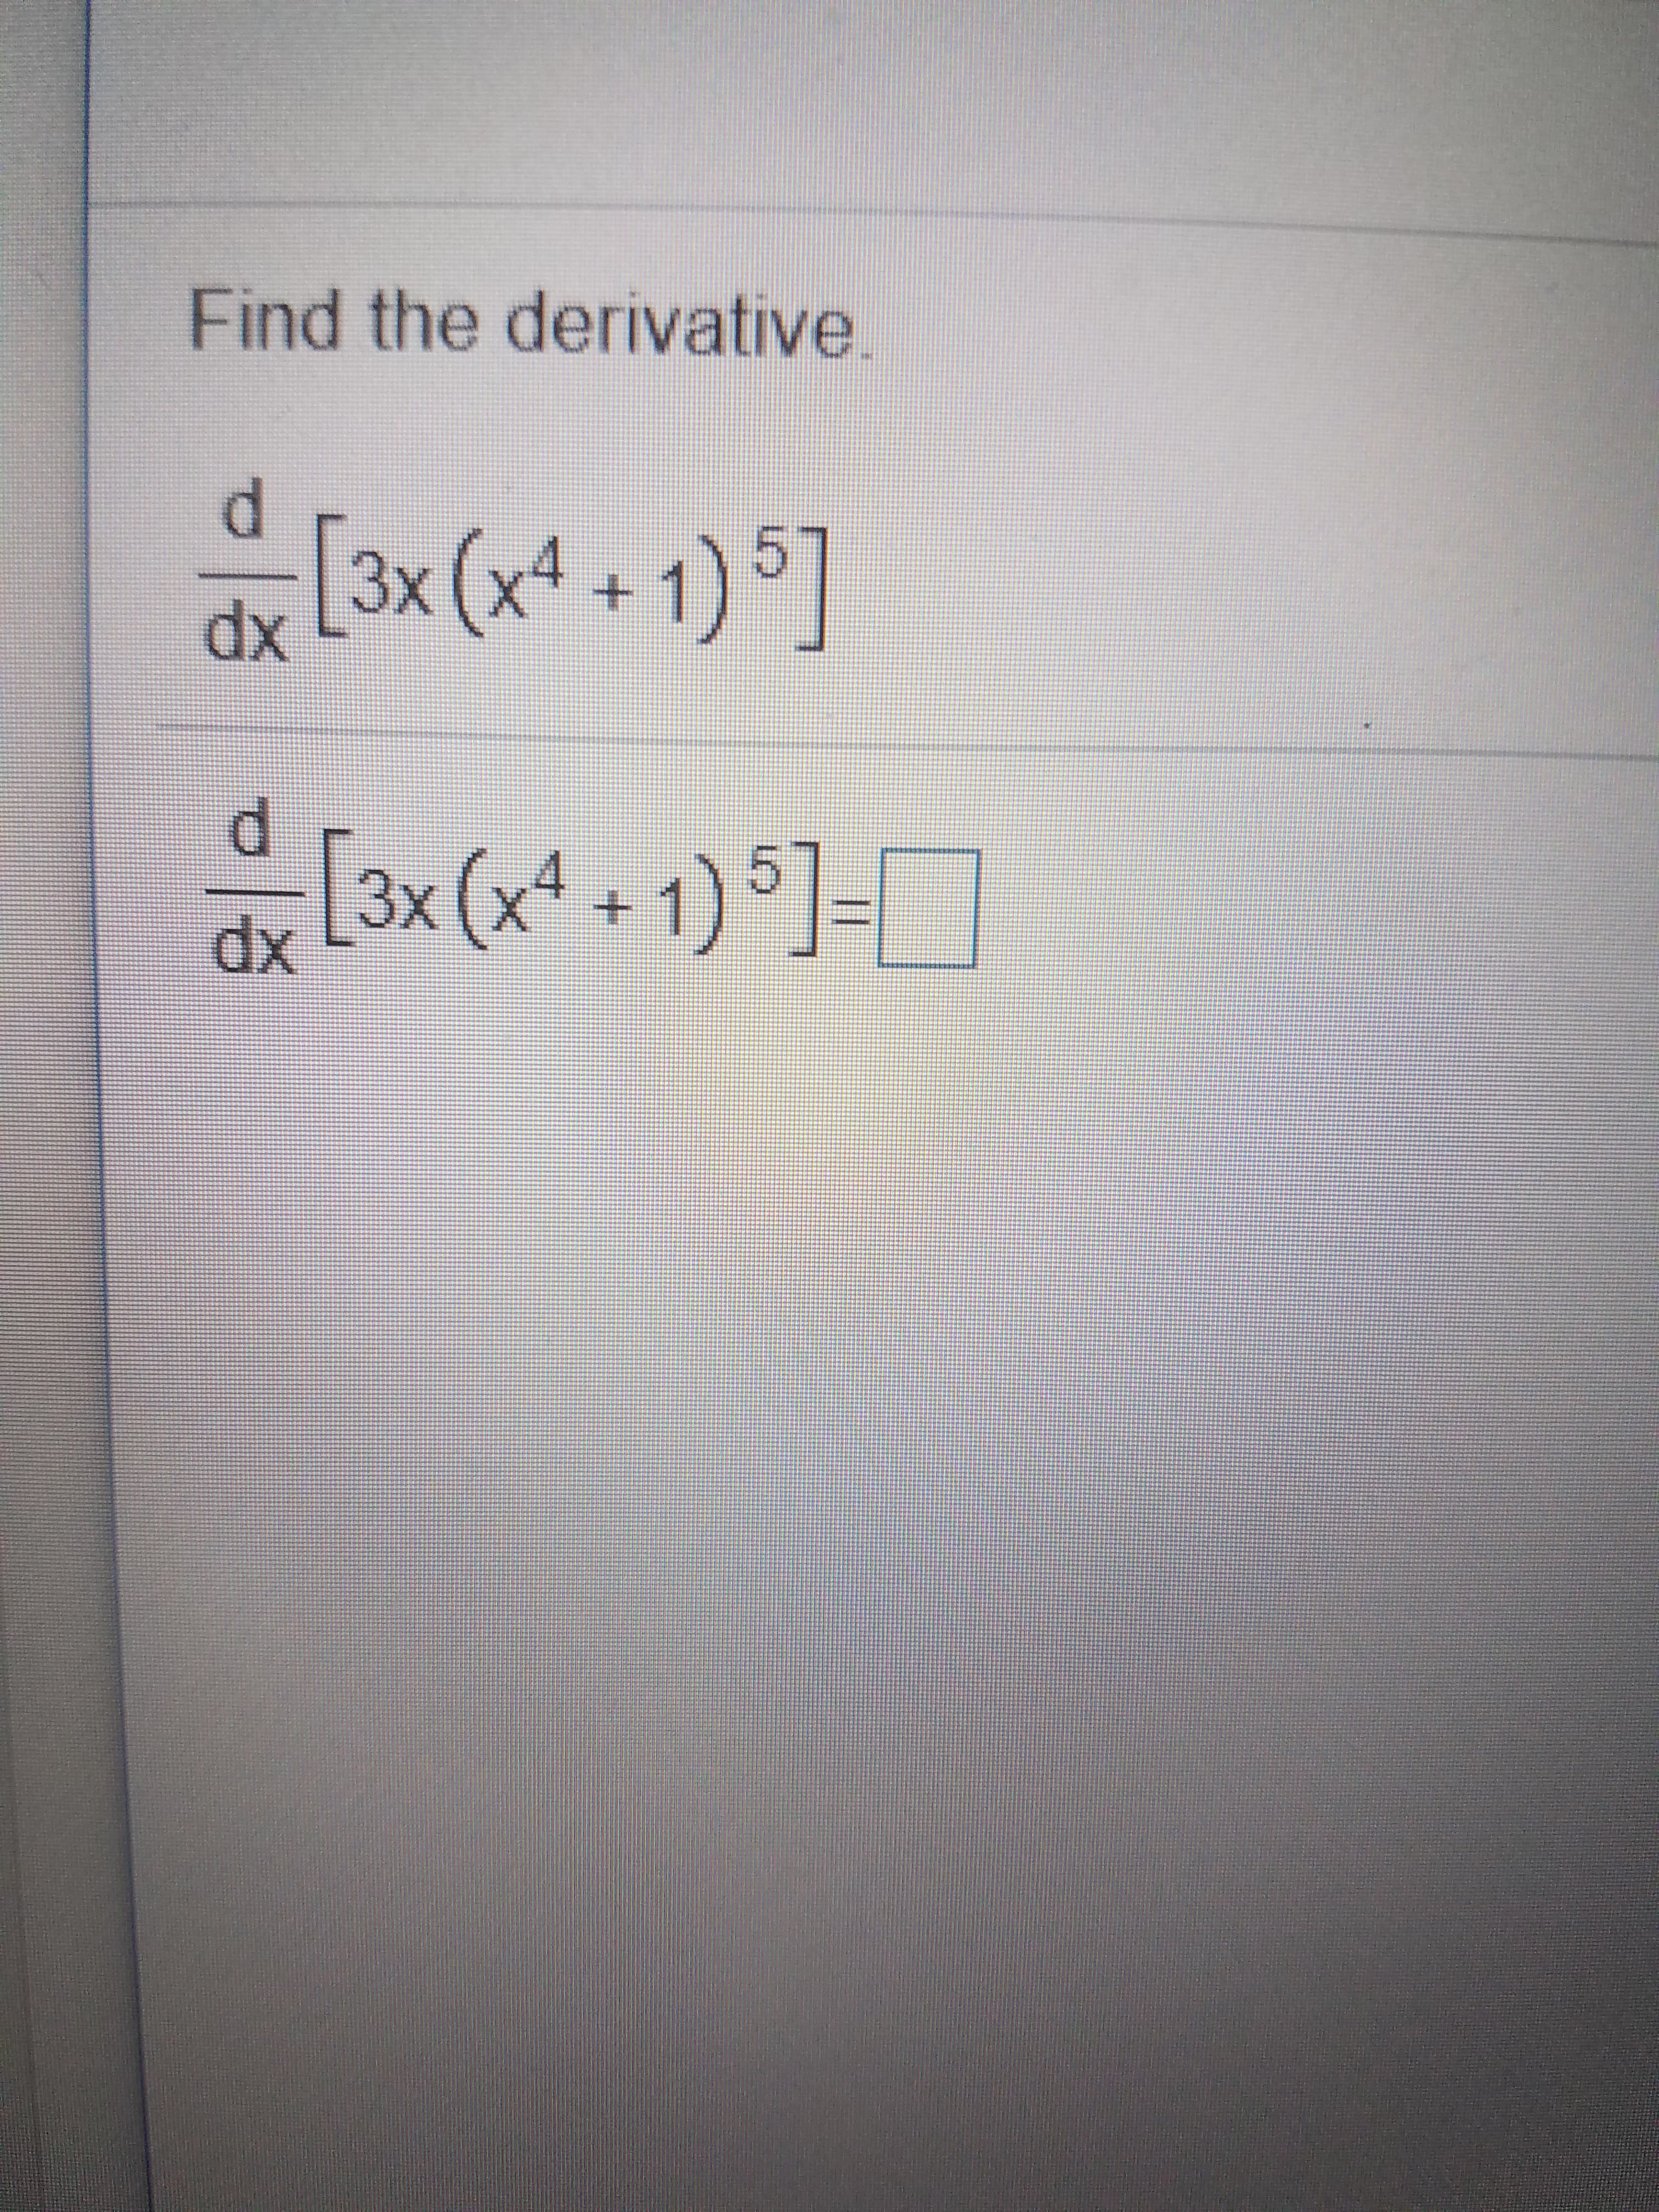 Find the derivative
3x (x4+ 1)5
dx
d
3x (x4 + 1)5]-
dx
